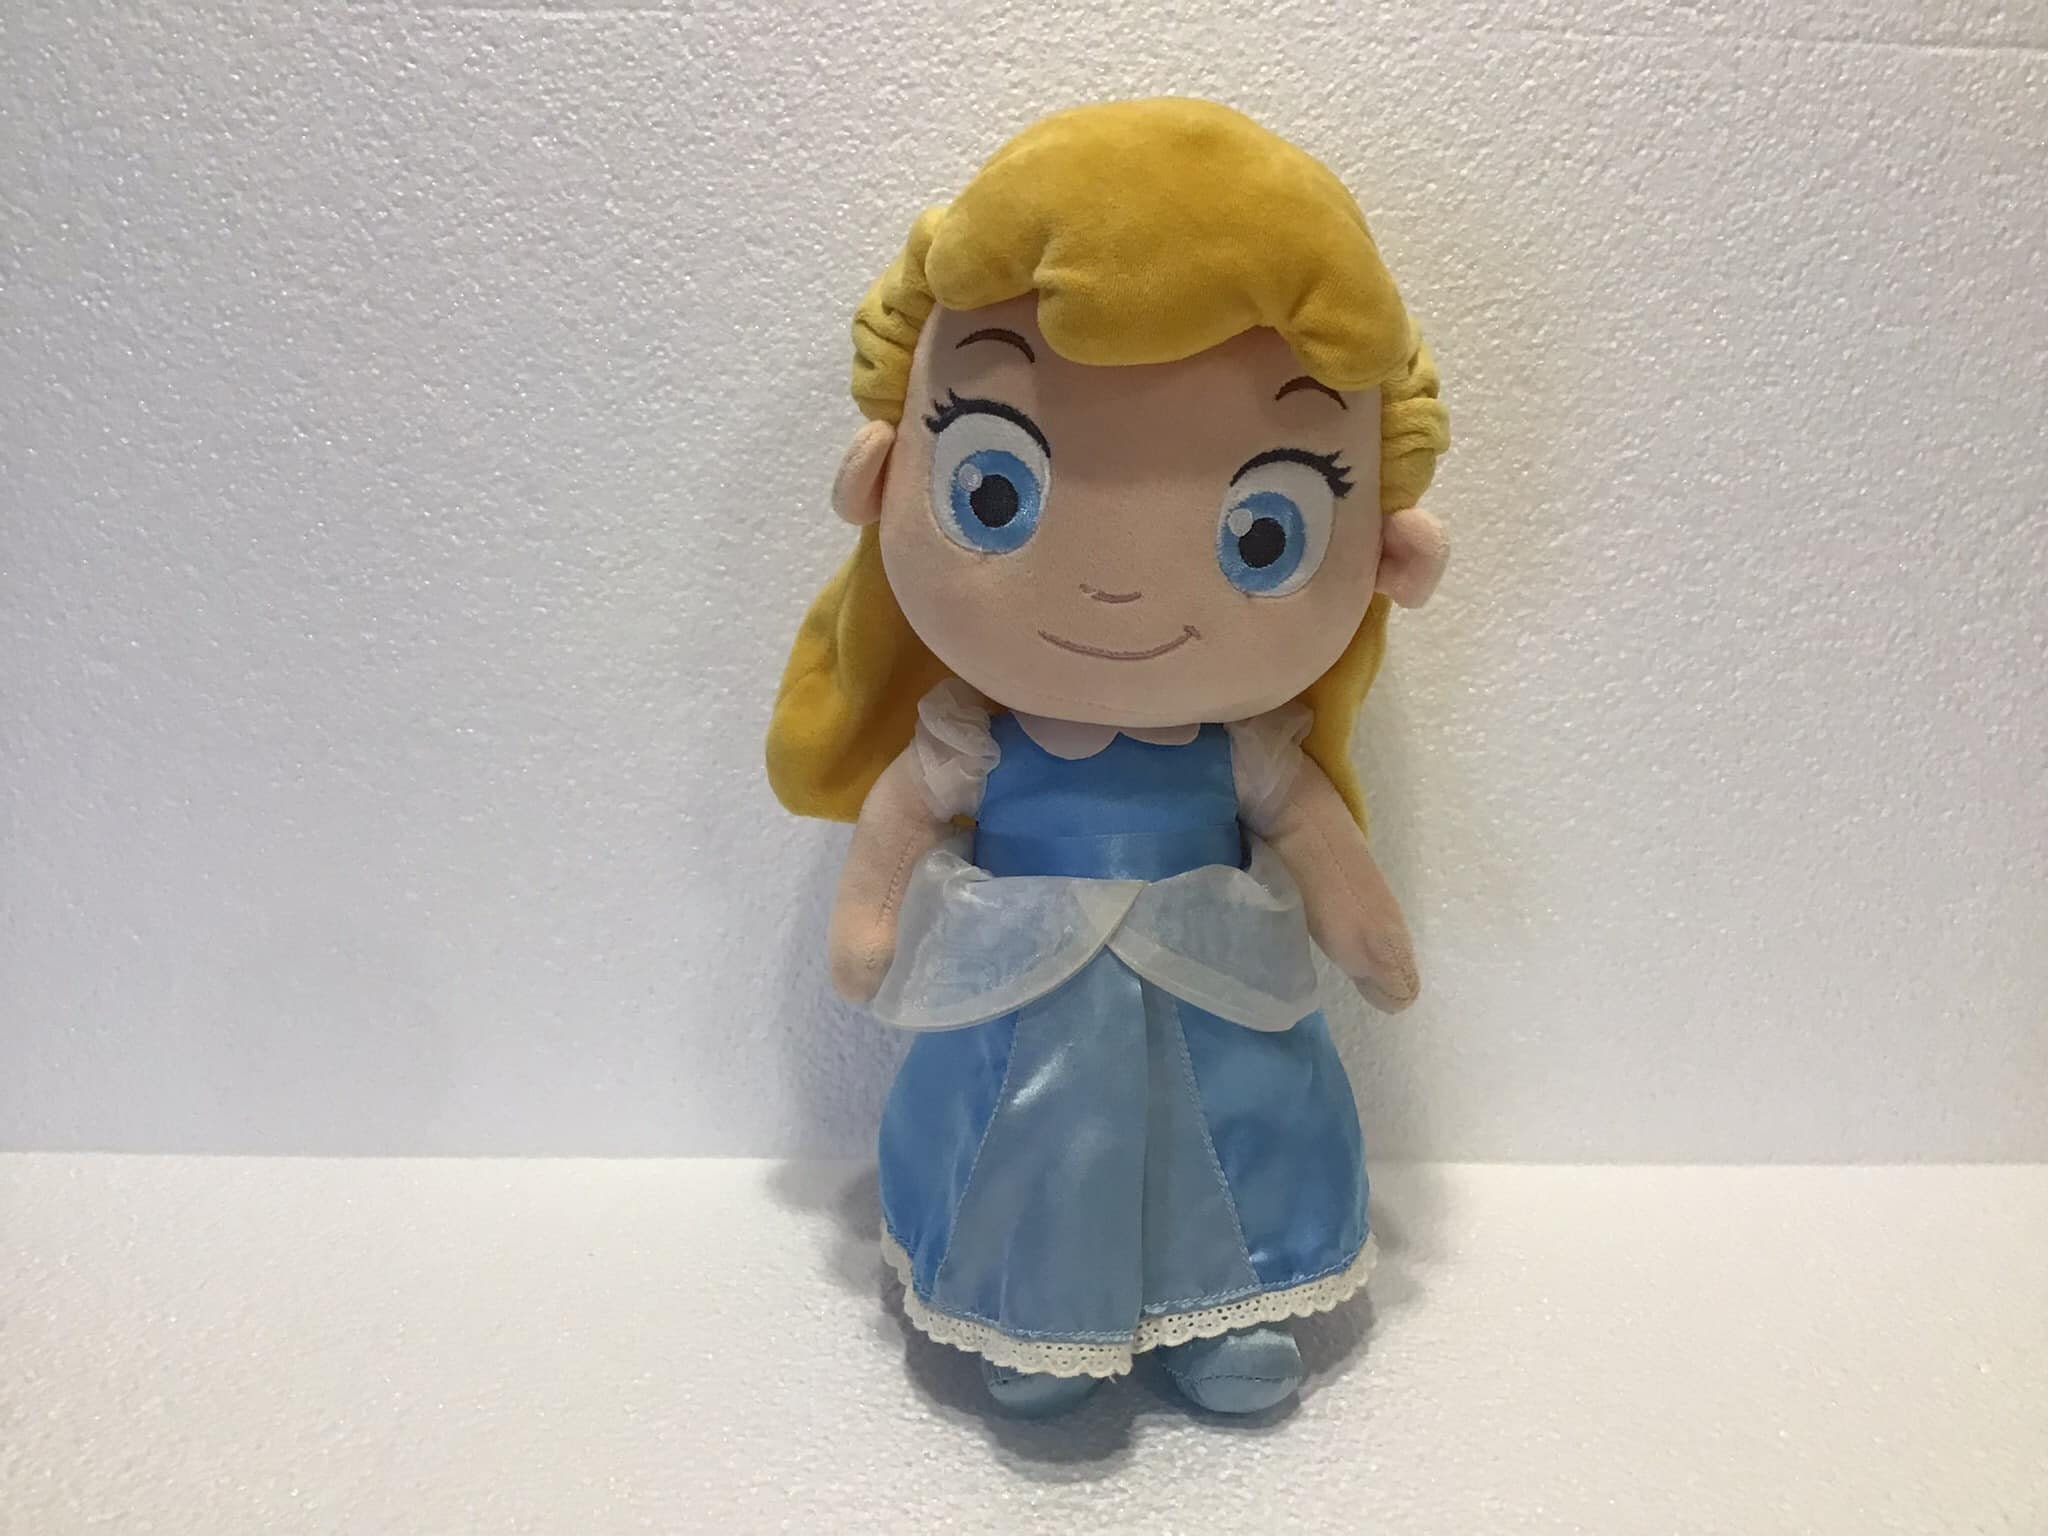 Disney Store Jumbo Plush Princess Cinderella Doll 32” NEW STUFFED DOLL LARGE